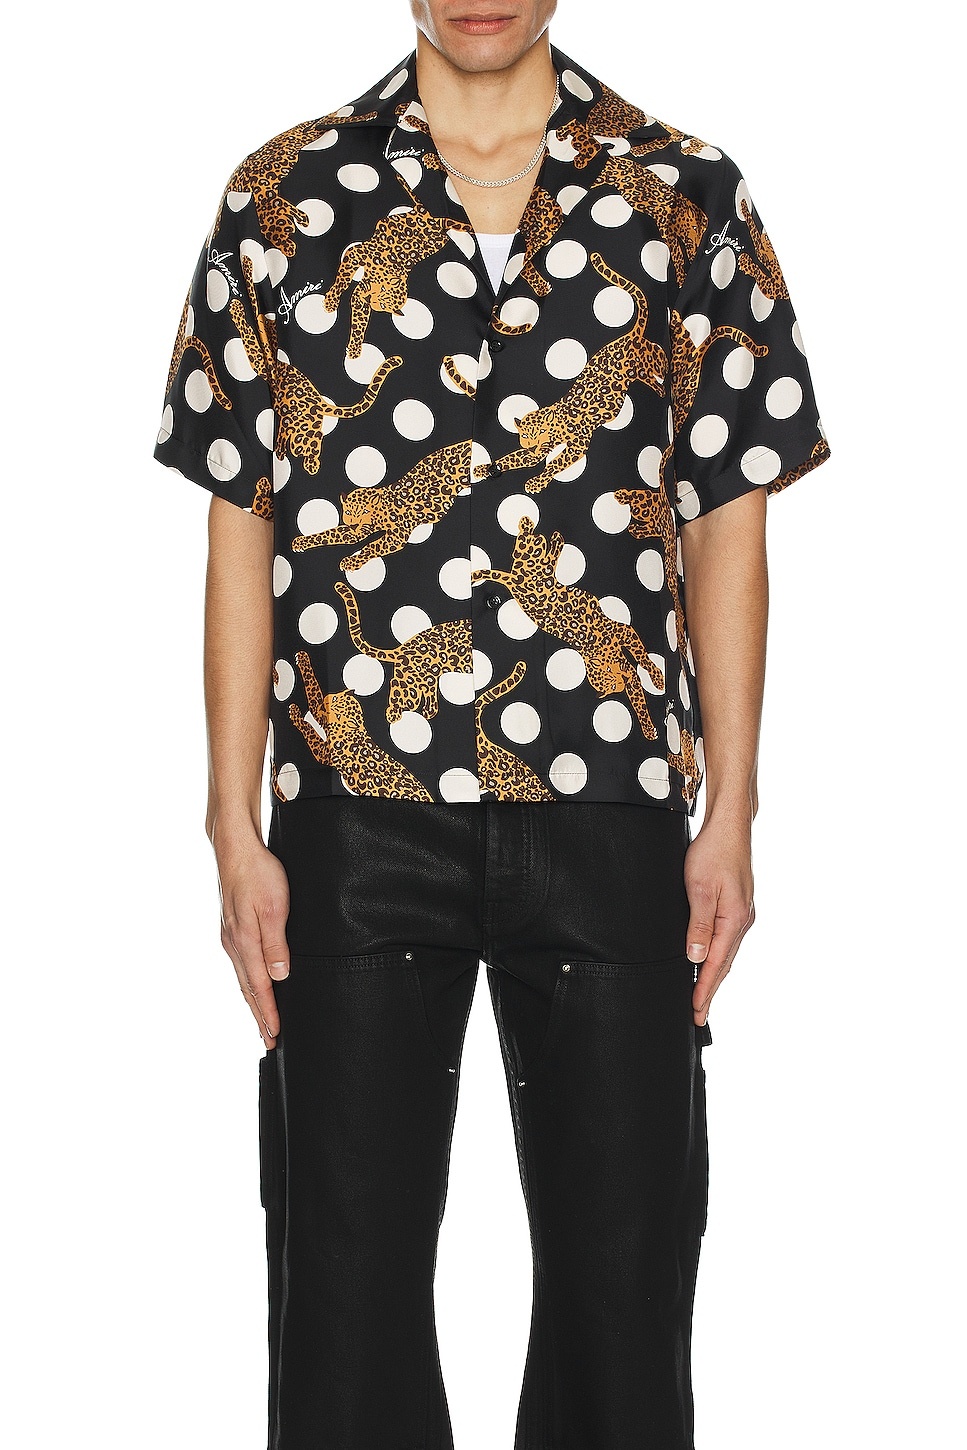 Leopard Polka Dots Bowling Shirt - 3